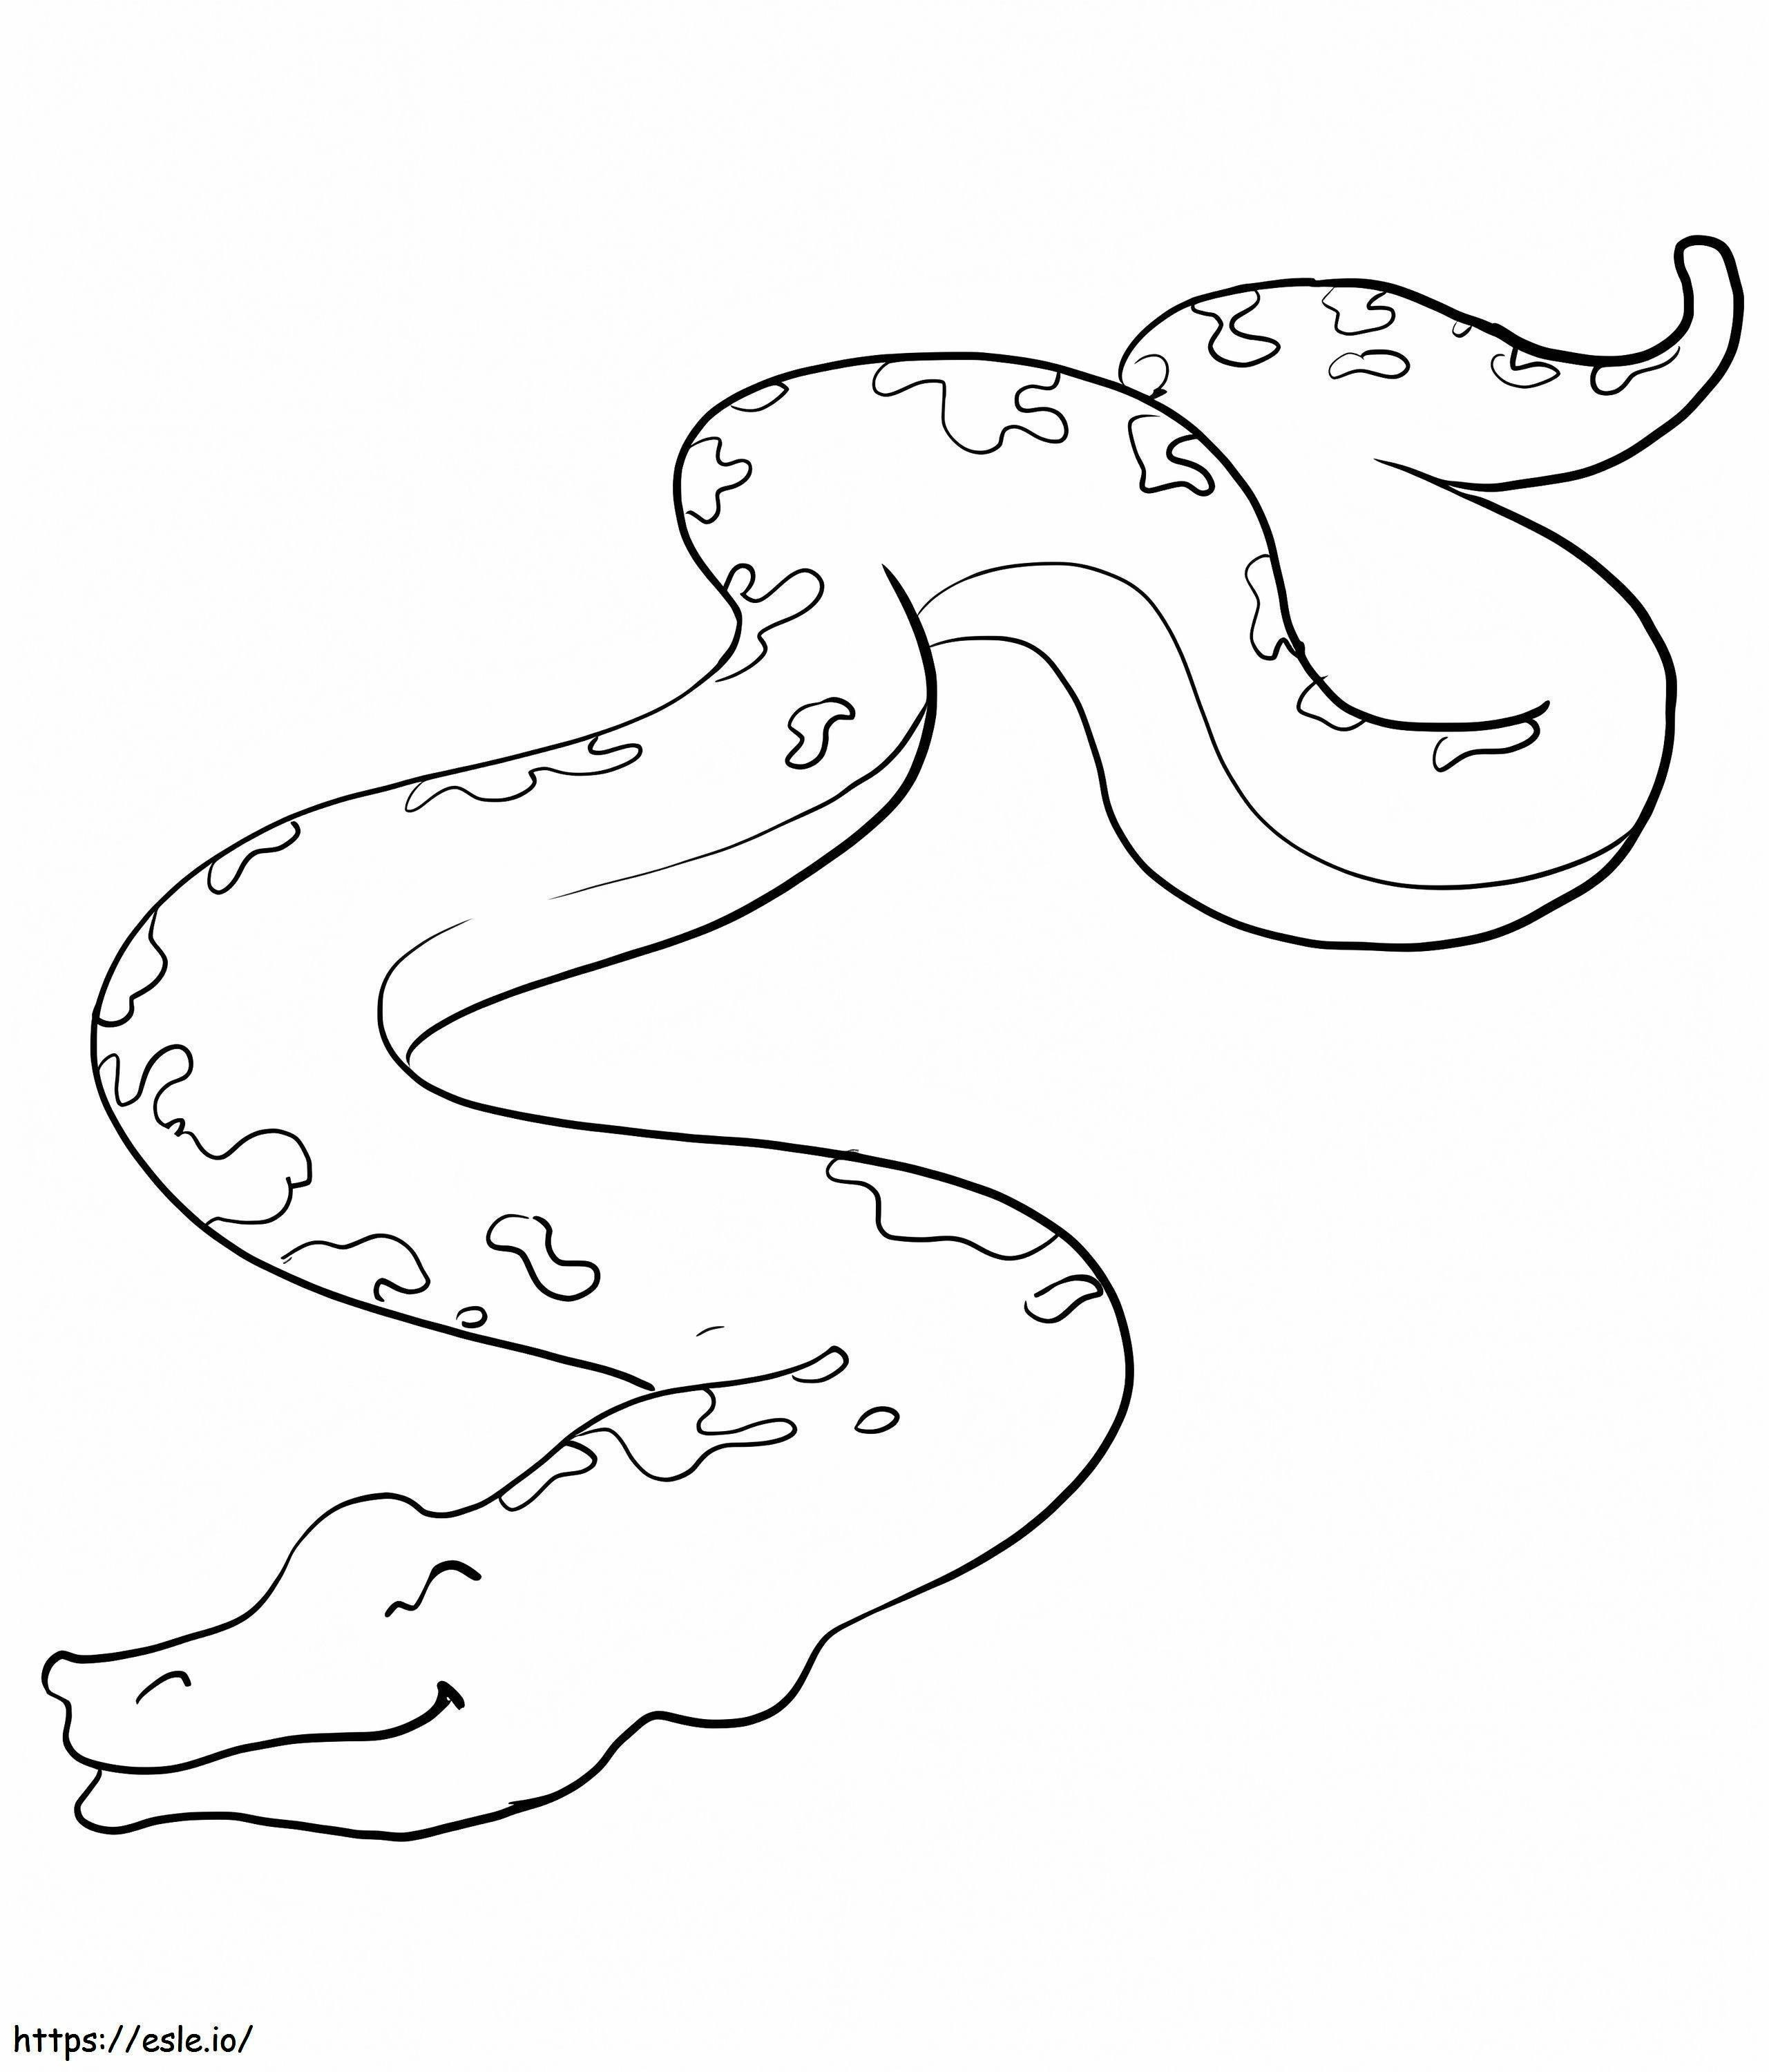 Anaconda de desenho animado para colorir